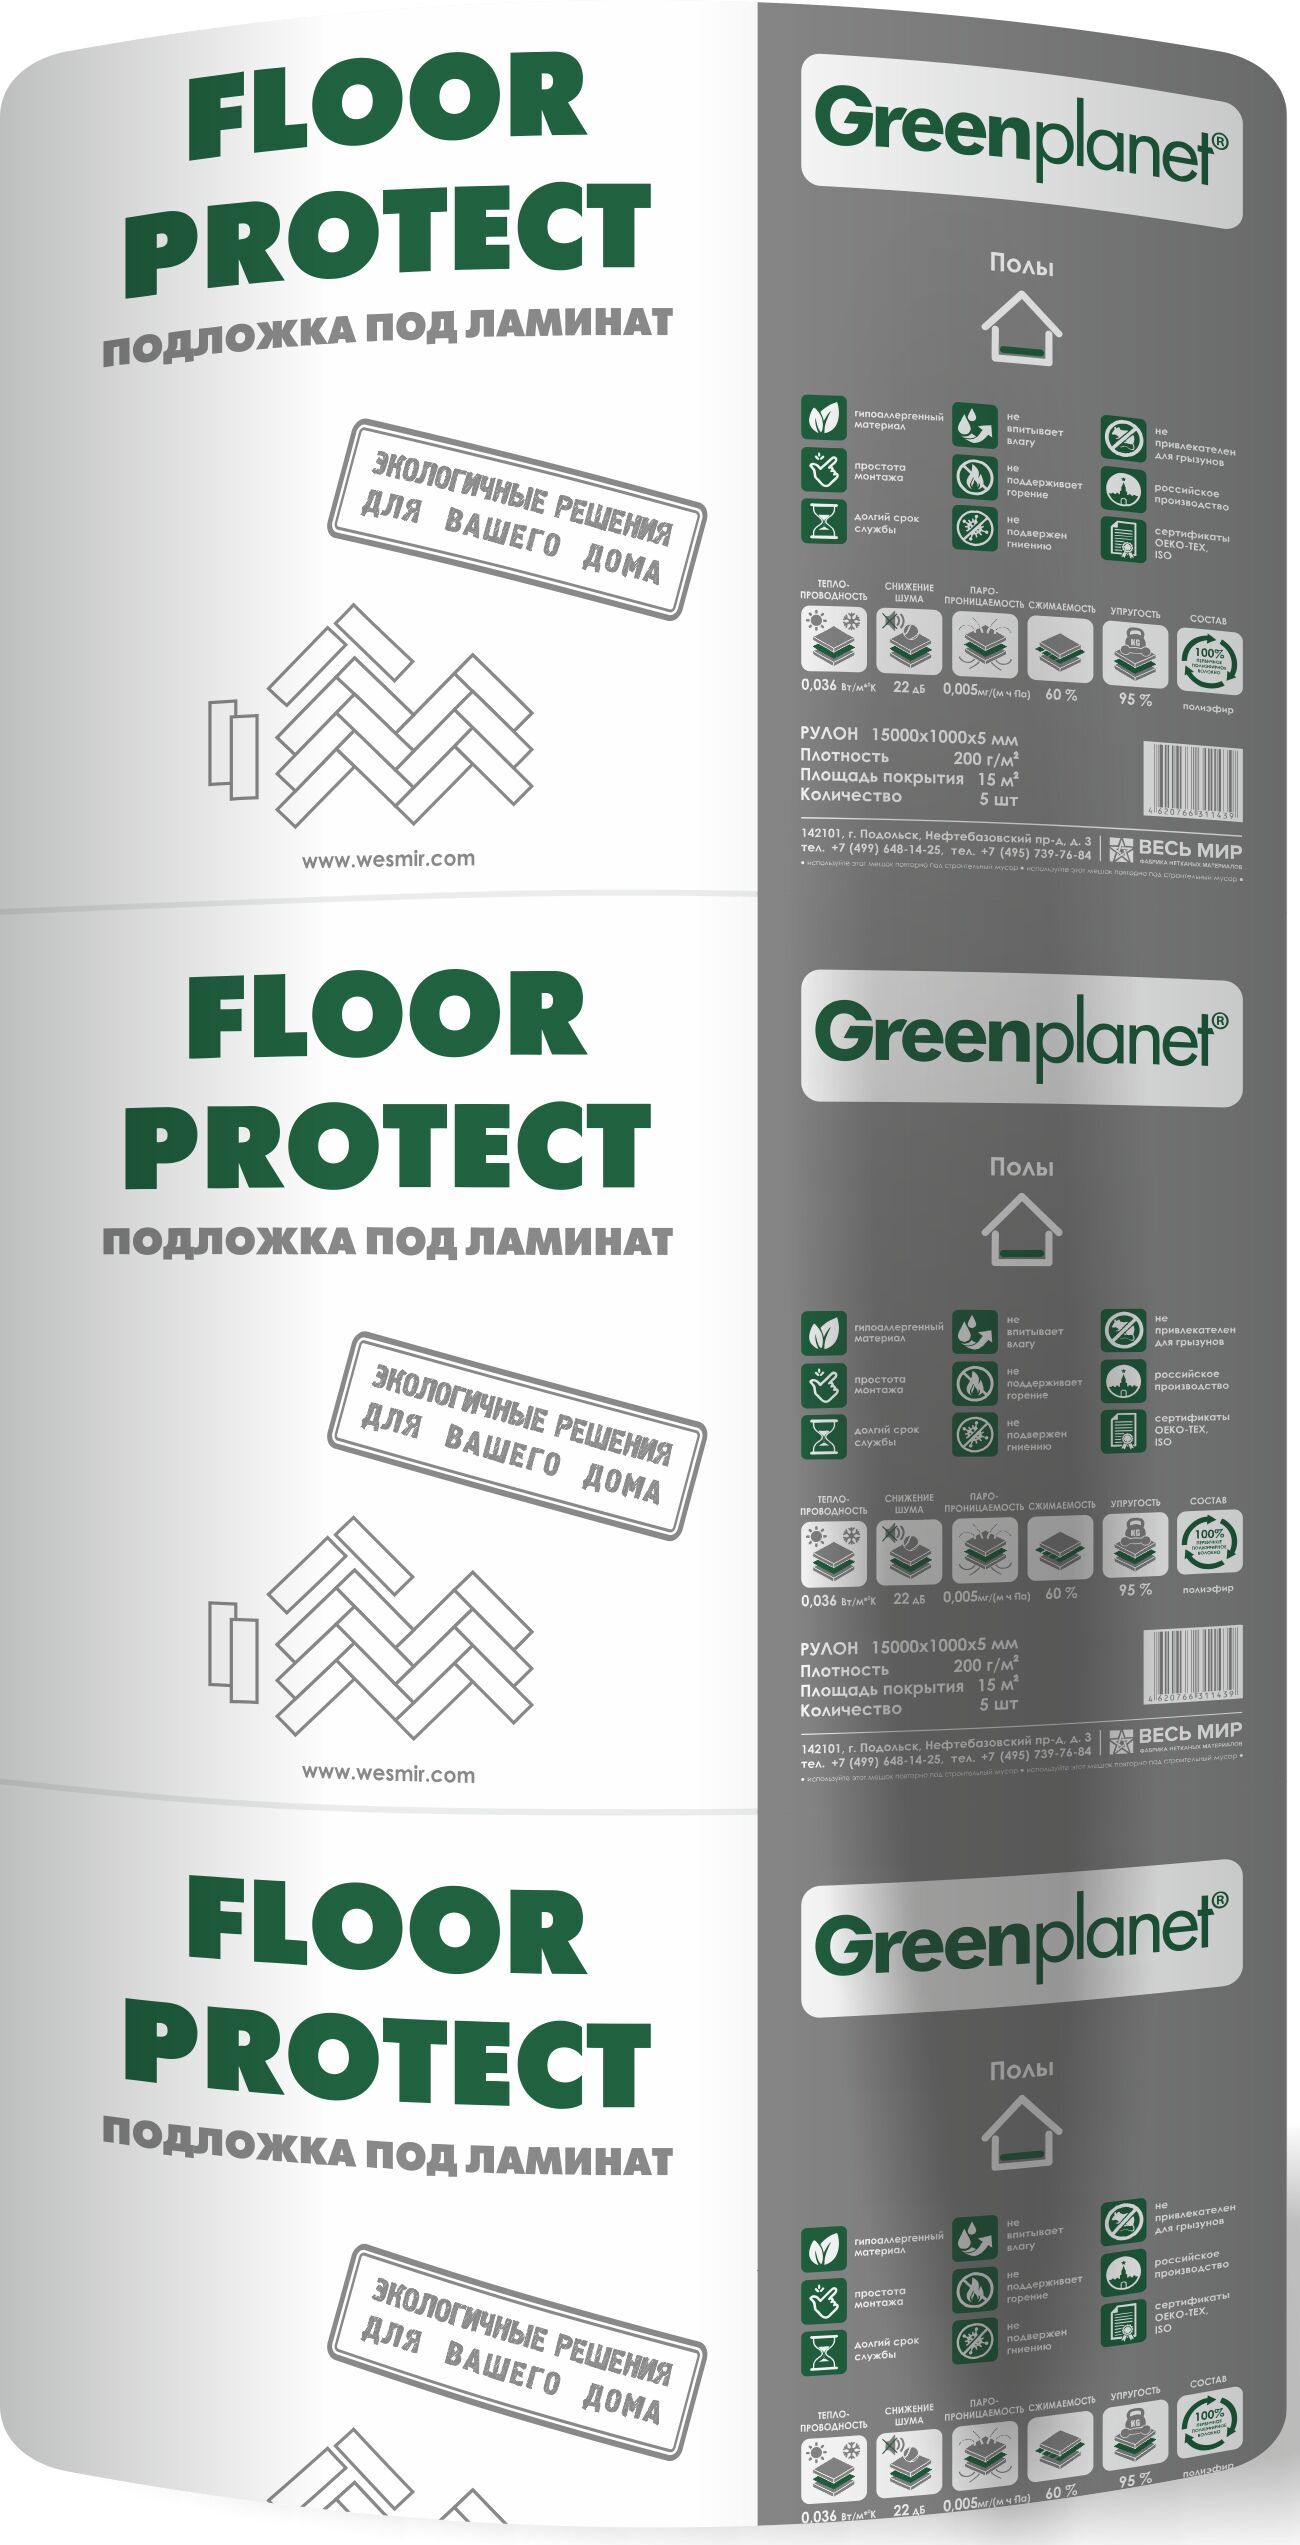 Greenplanet Floor Protect Подложка под ламинат 2мм, 5м2, 0.075м3 (Шелтер), Green Planet Floor Protect Подложка под ламинат 2х1000х5000/1шт./5м2/0.075м3